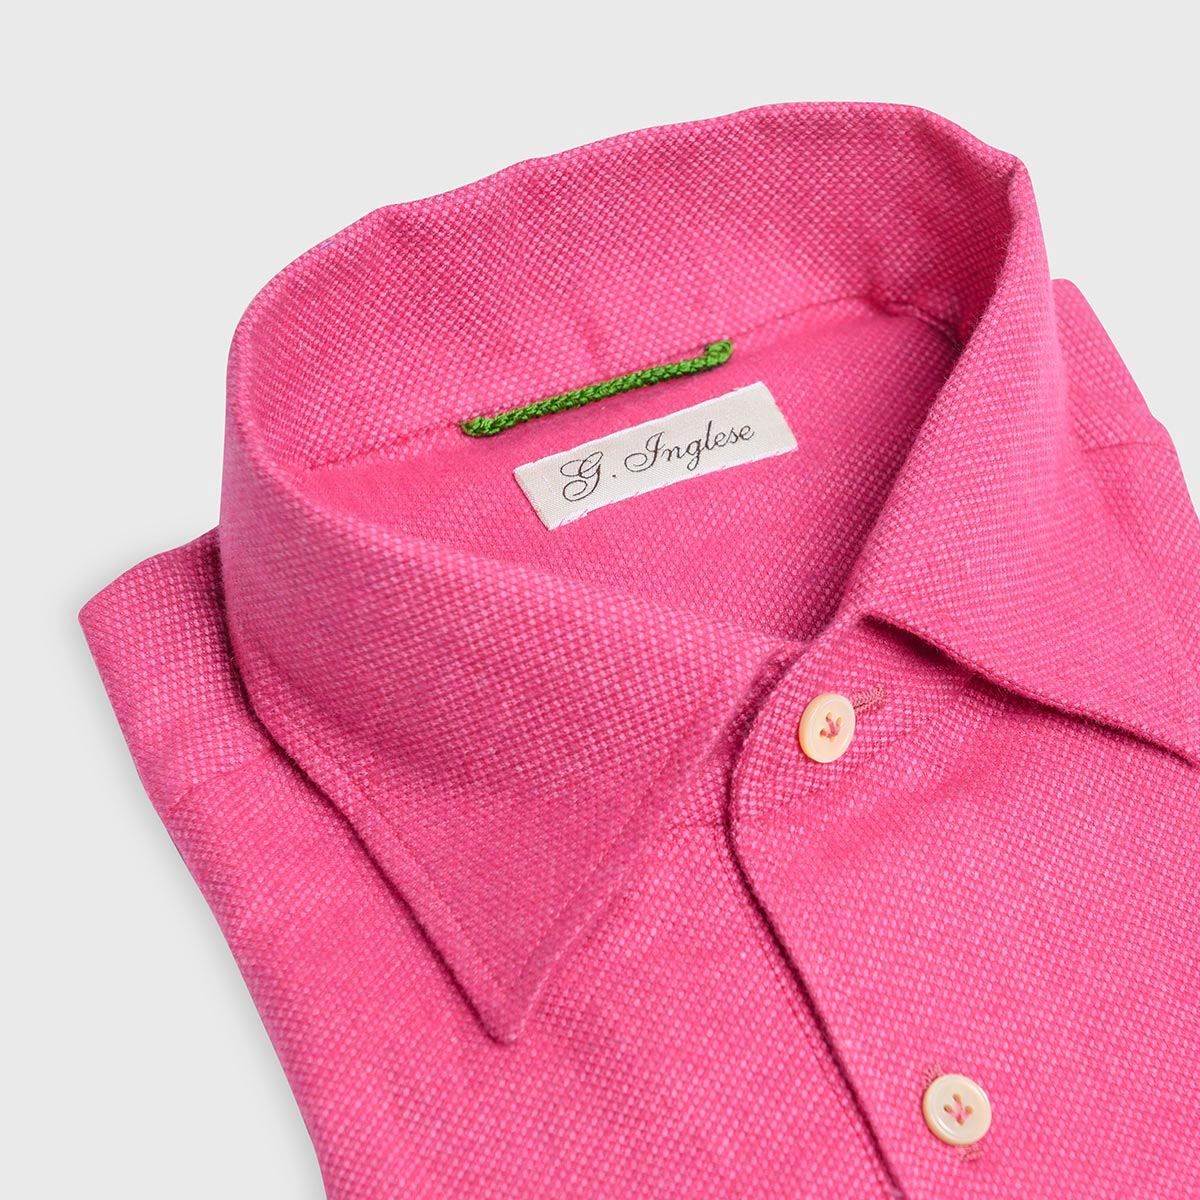 Mastroianni Fucxia Cotton Flannel Polo Shirt G. Inglese on sale 2022 2